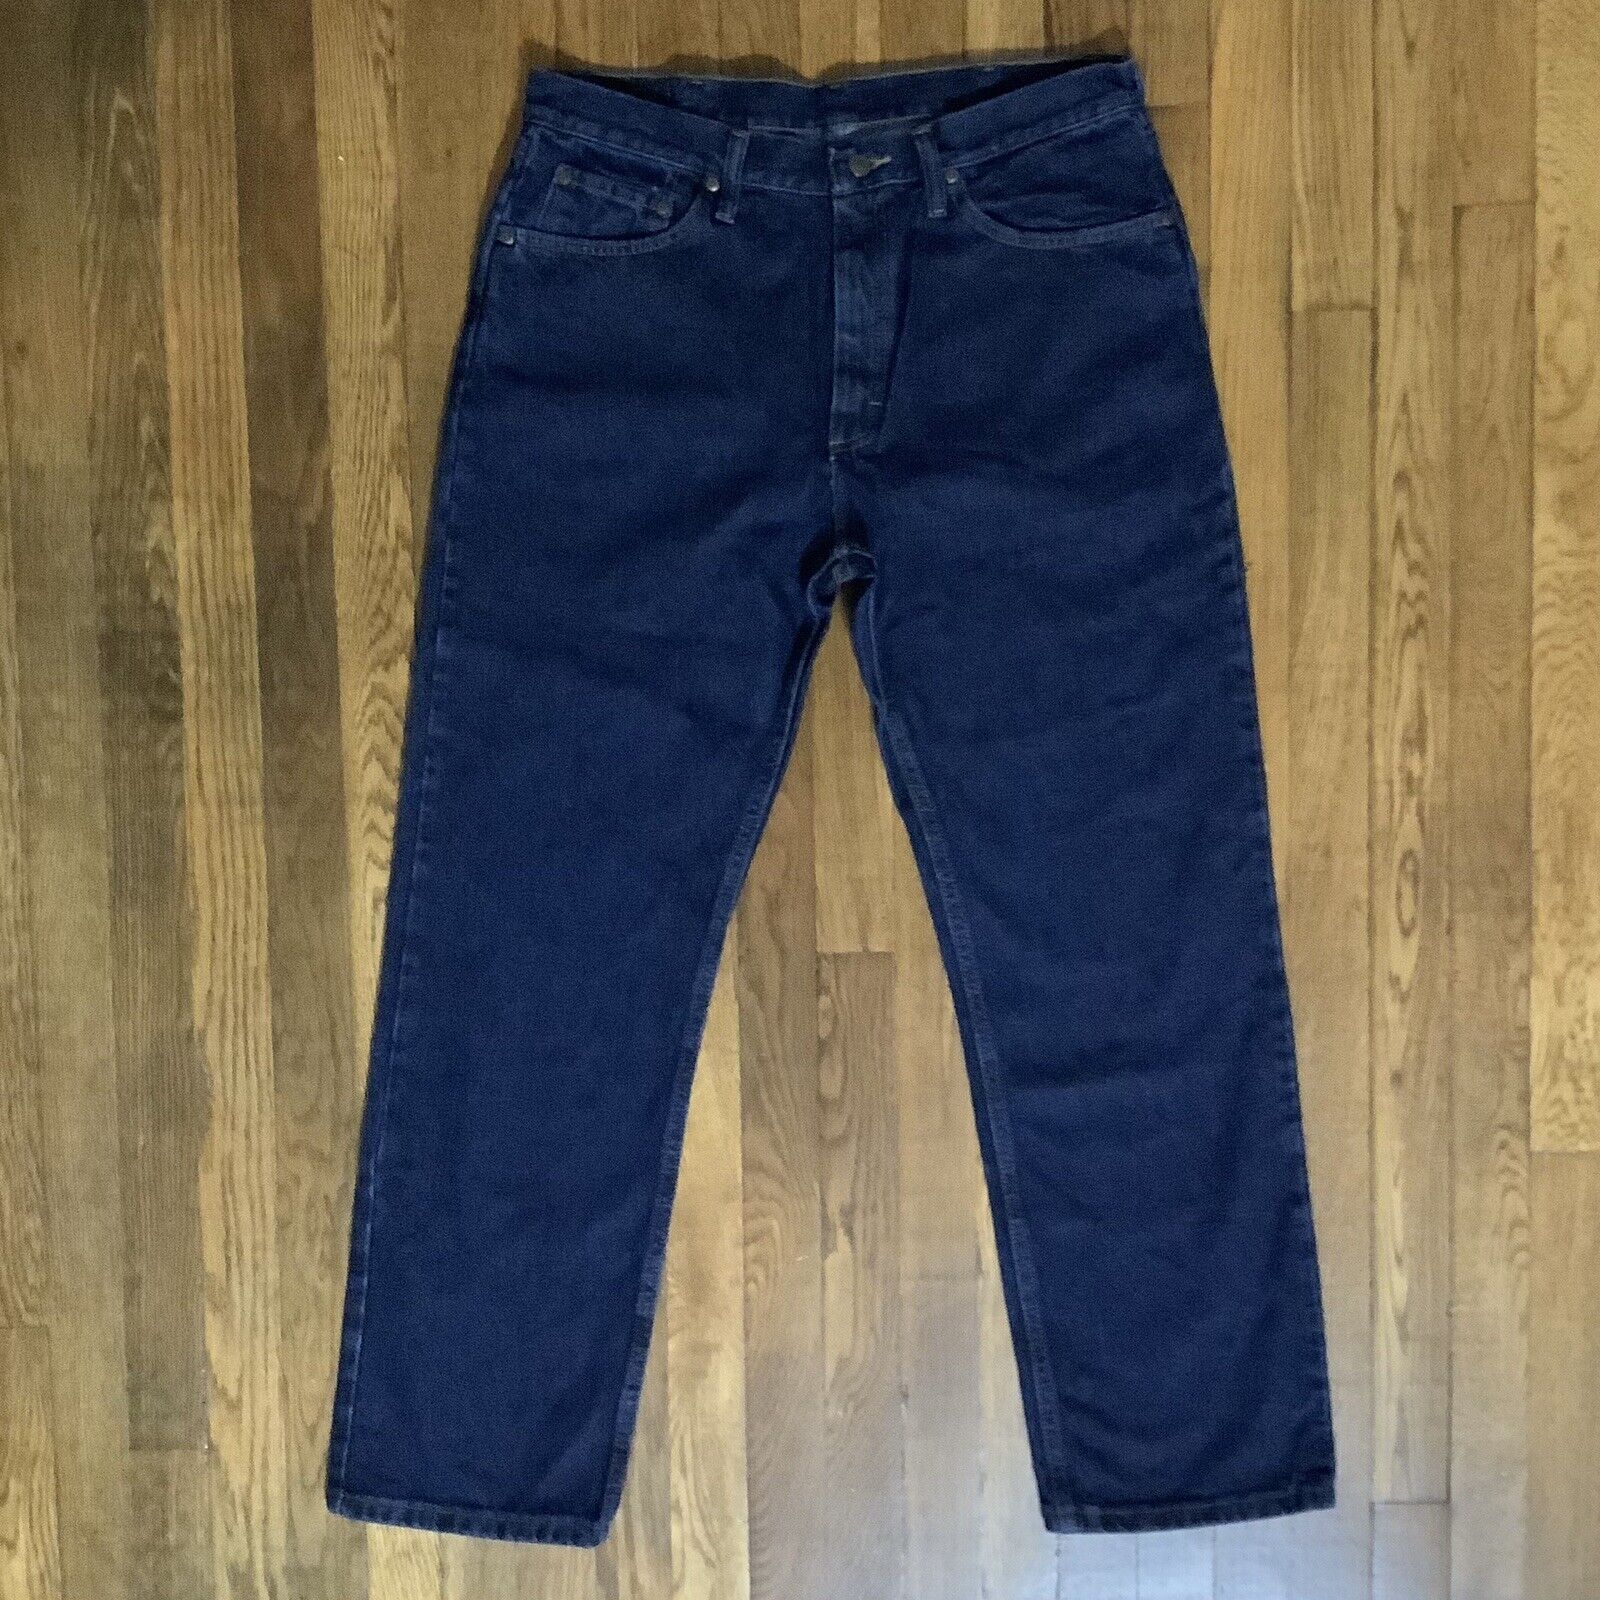 2 Pair Wrangler 5 Star Regular Fit Jeans 34 X 30 for sale online 